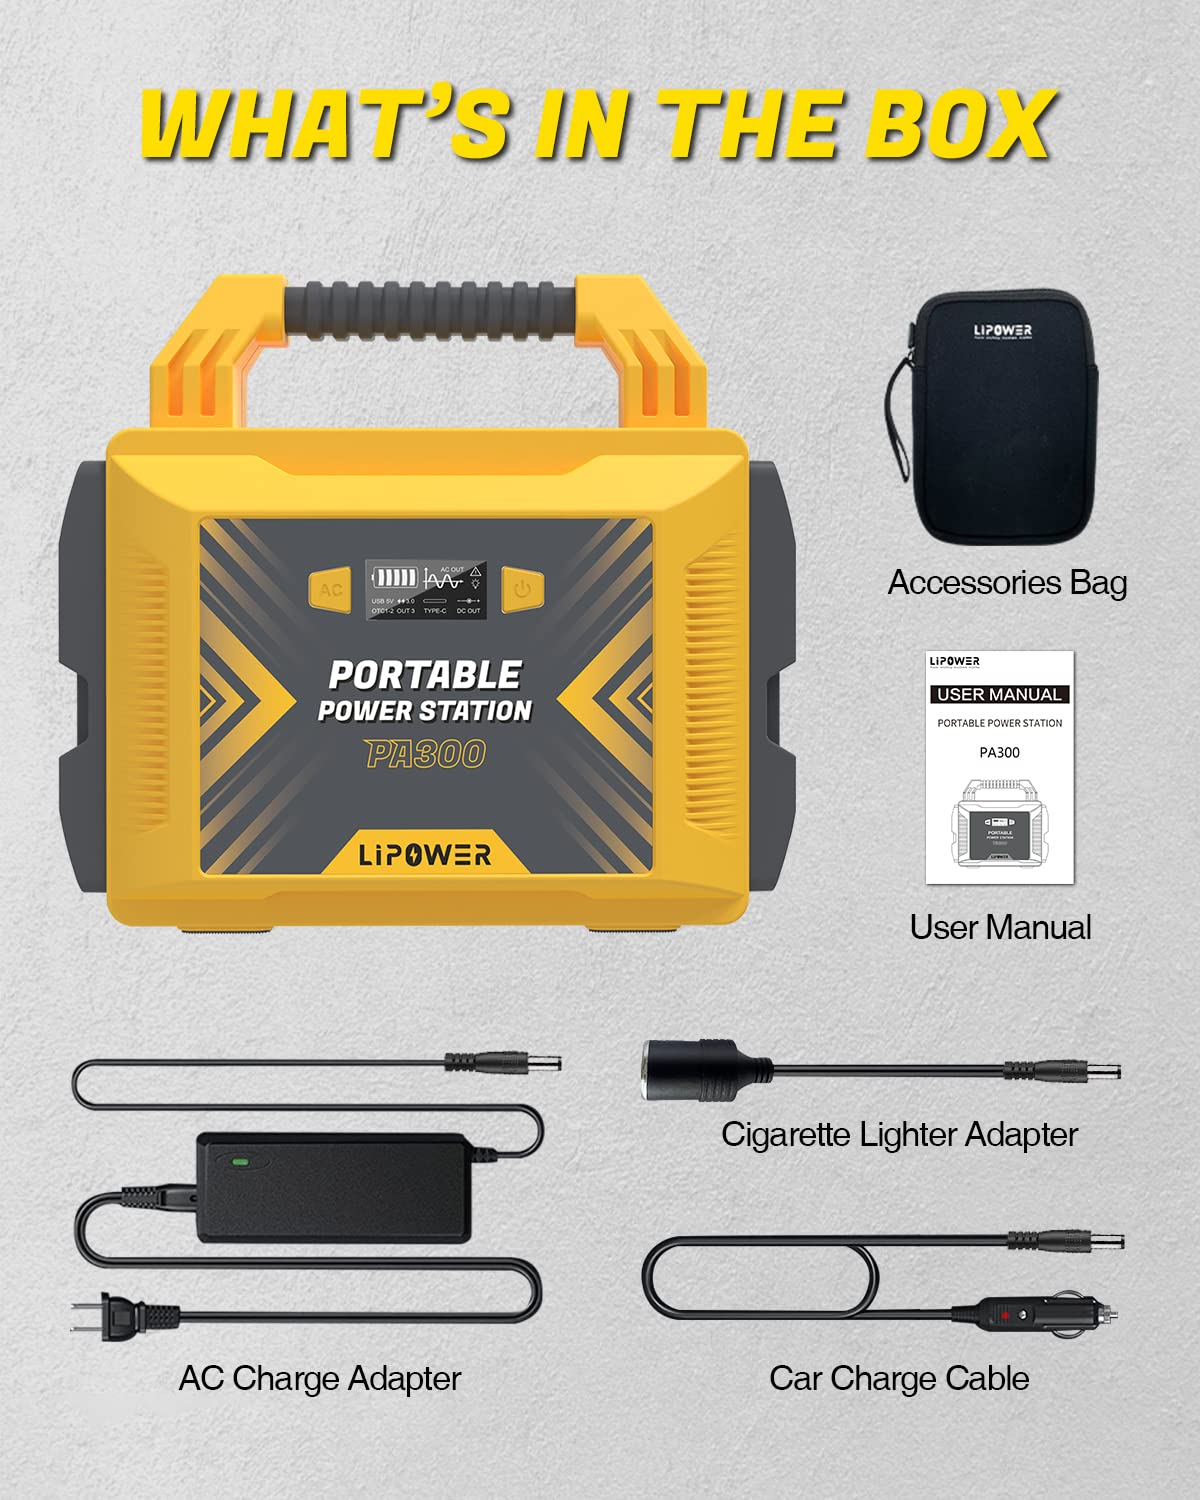 LIPOWER USB Camping Lantern LED Emergency Light 5W, Warm White